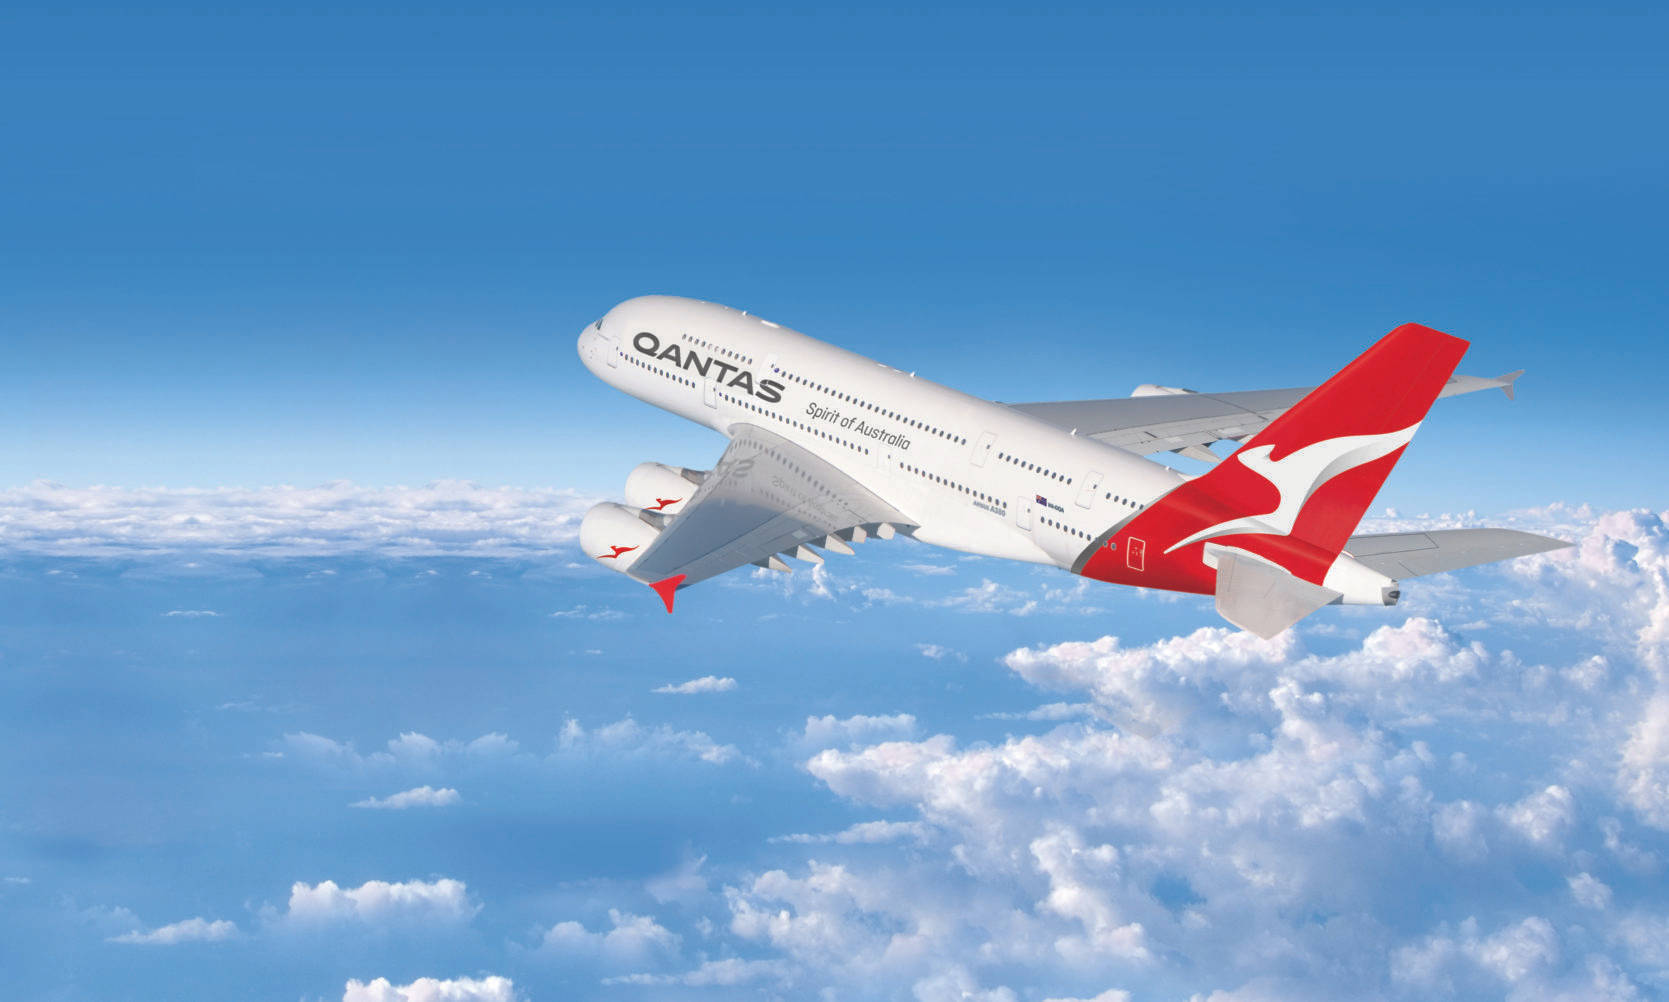 Qantas Airways Passenger Airplane In The Blue Sky Wallpaper